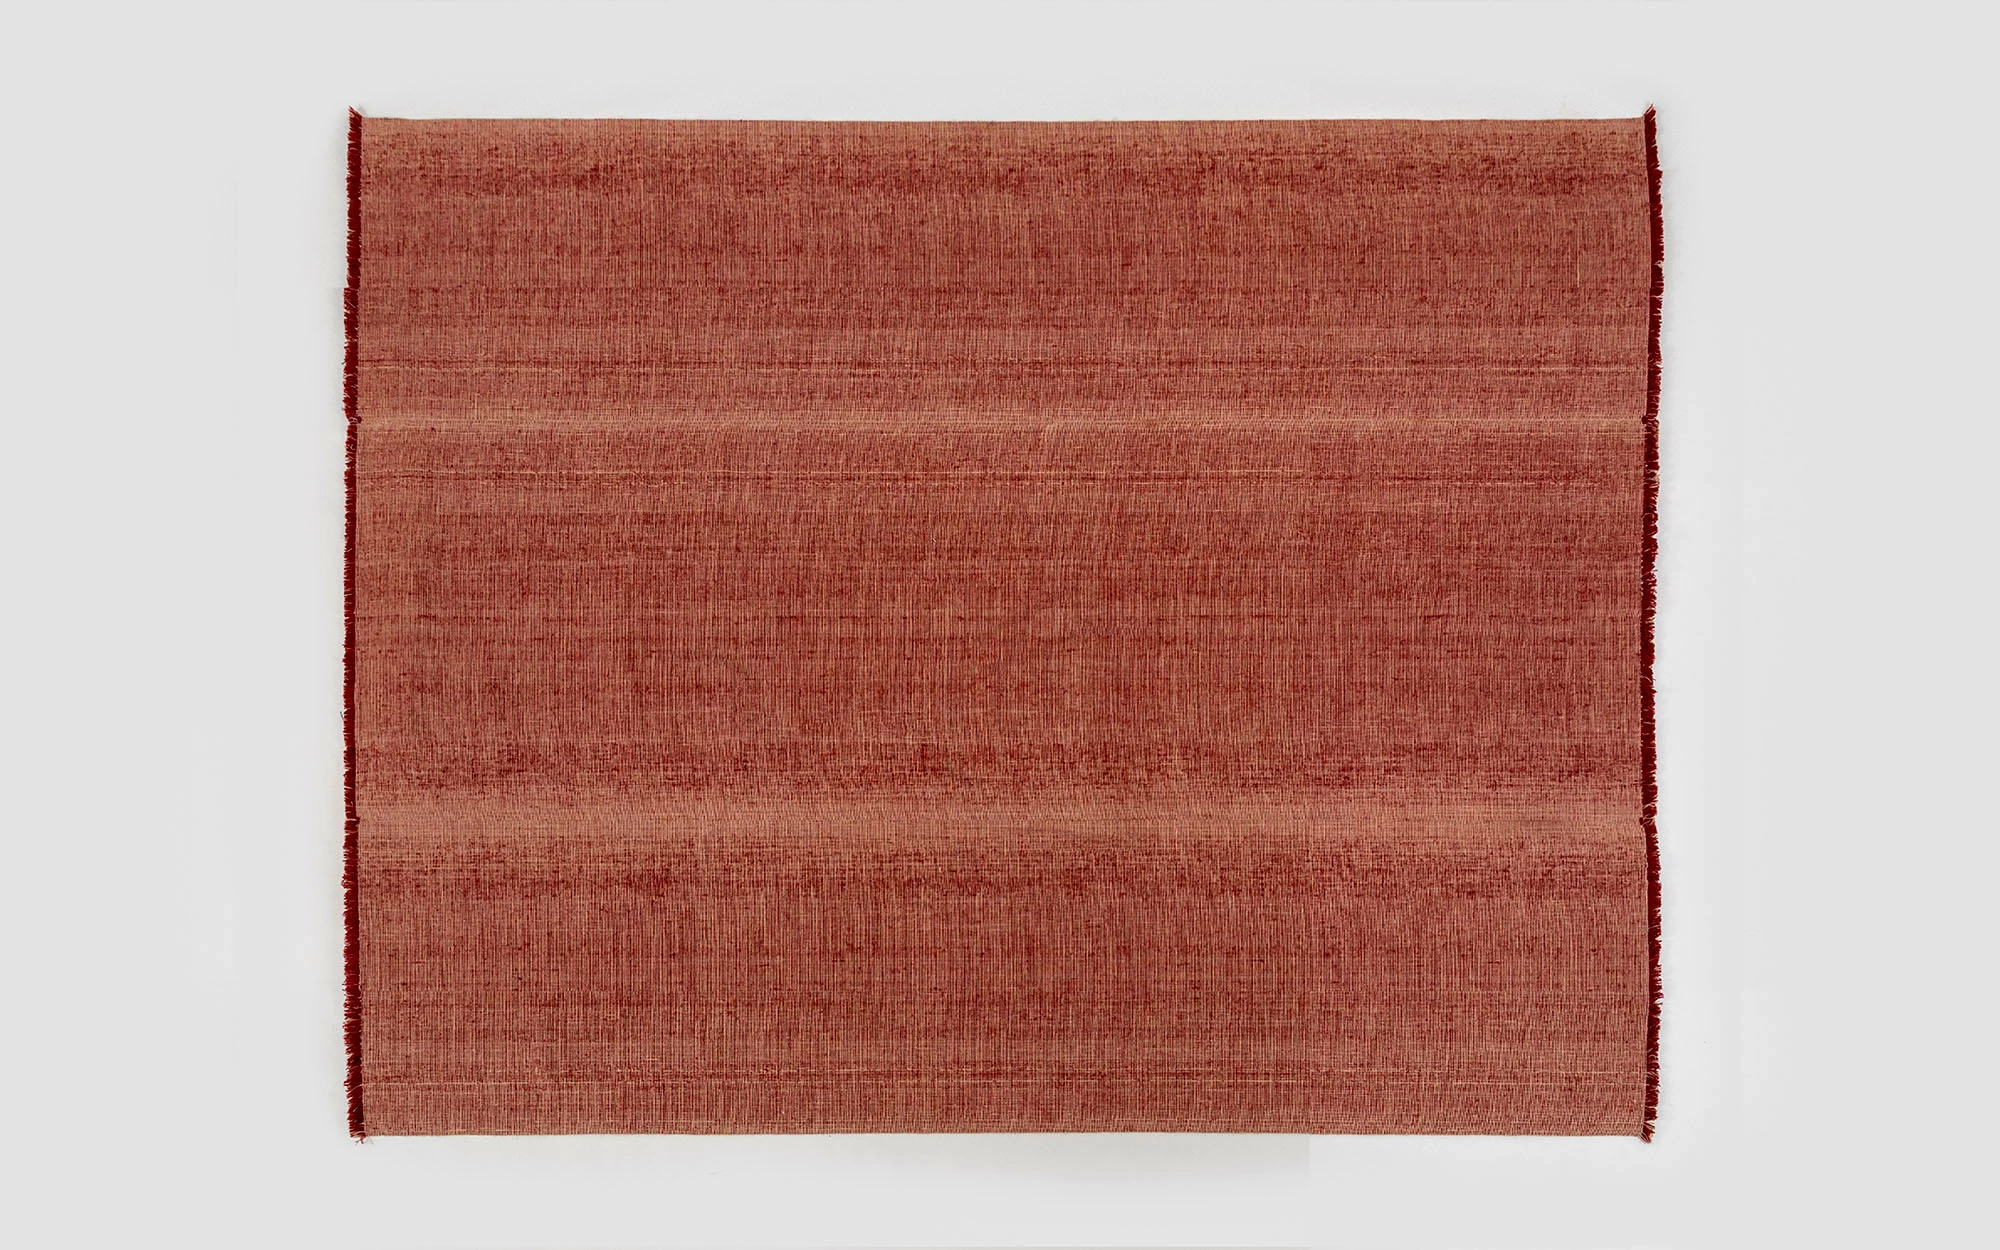 Wilton Carpet S - Ronan & Erwan Bouroullec - Bench - Galerie kreo